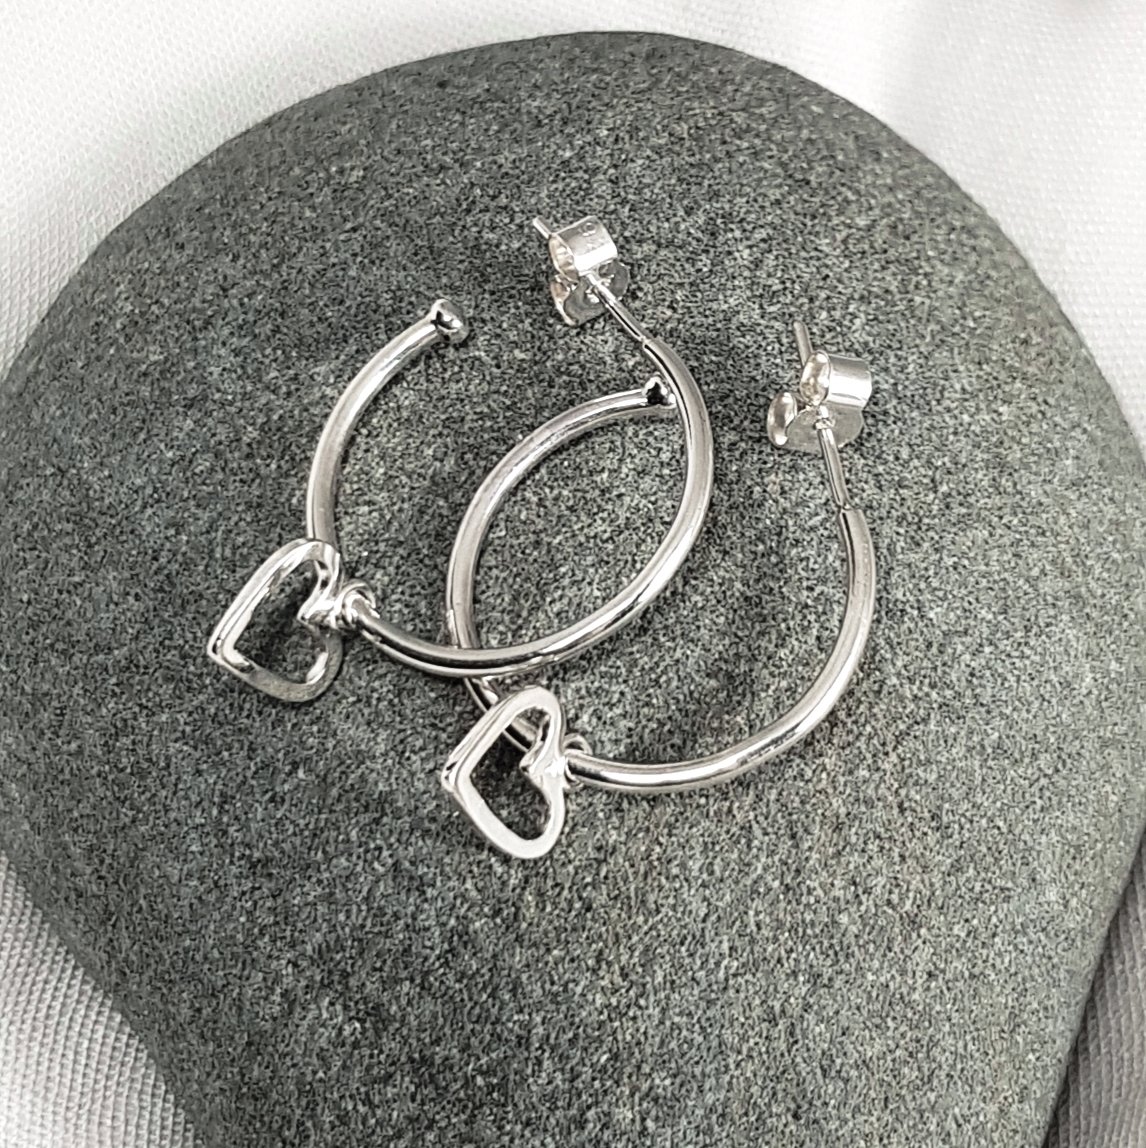 Image of Silver Hoop Earrings, Sterling Silver Hoops with Heart Charms, Heart Earrings